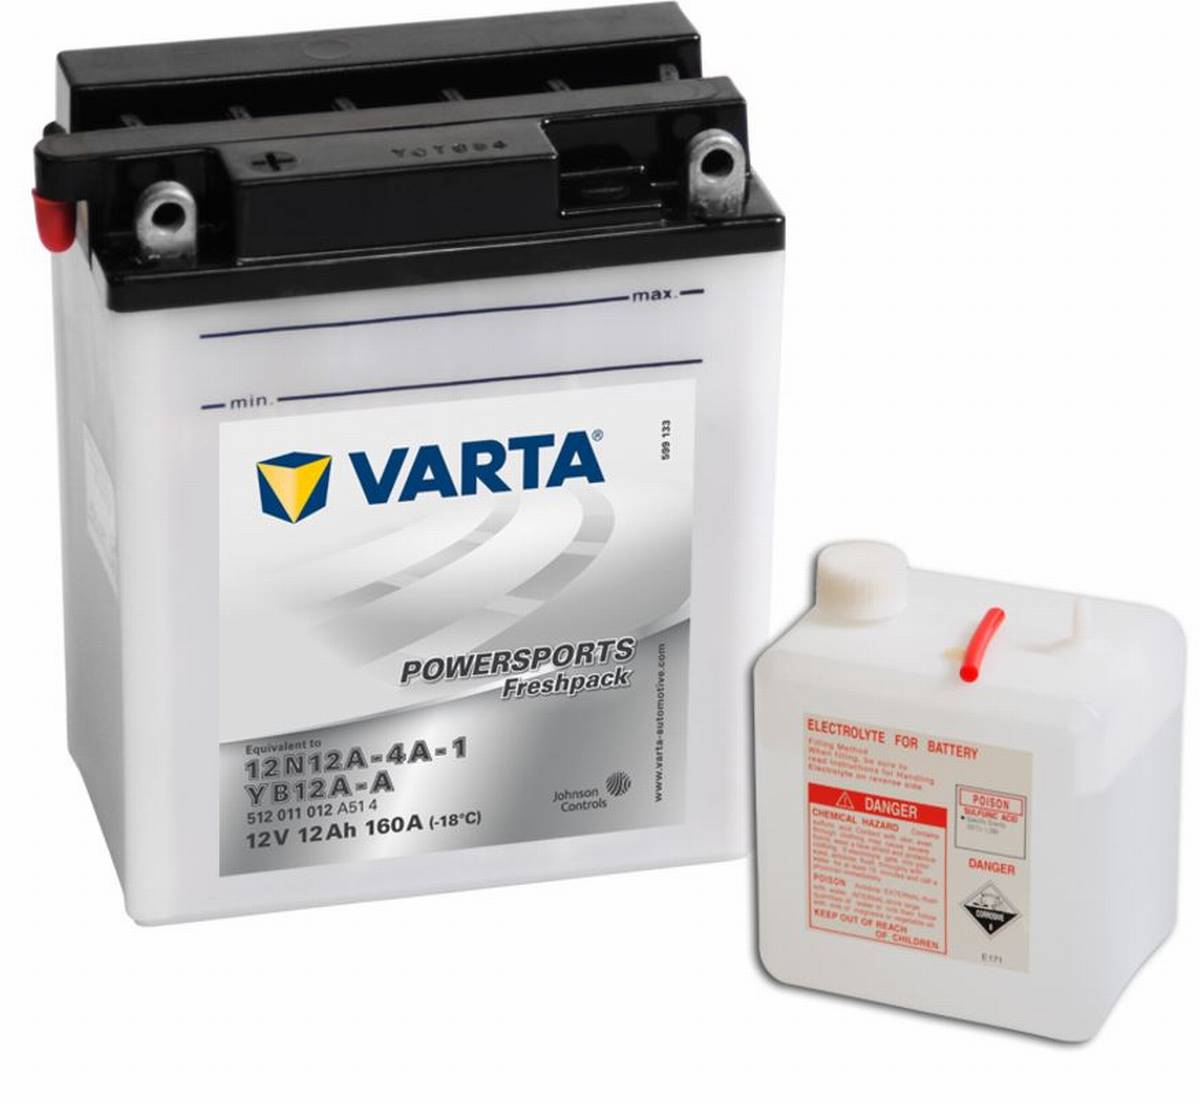 Varta Powersports Freshpack 12N12A-4A-1 Motorrad Batterie YB12A-A